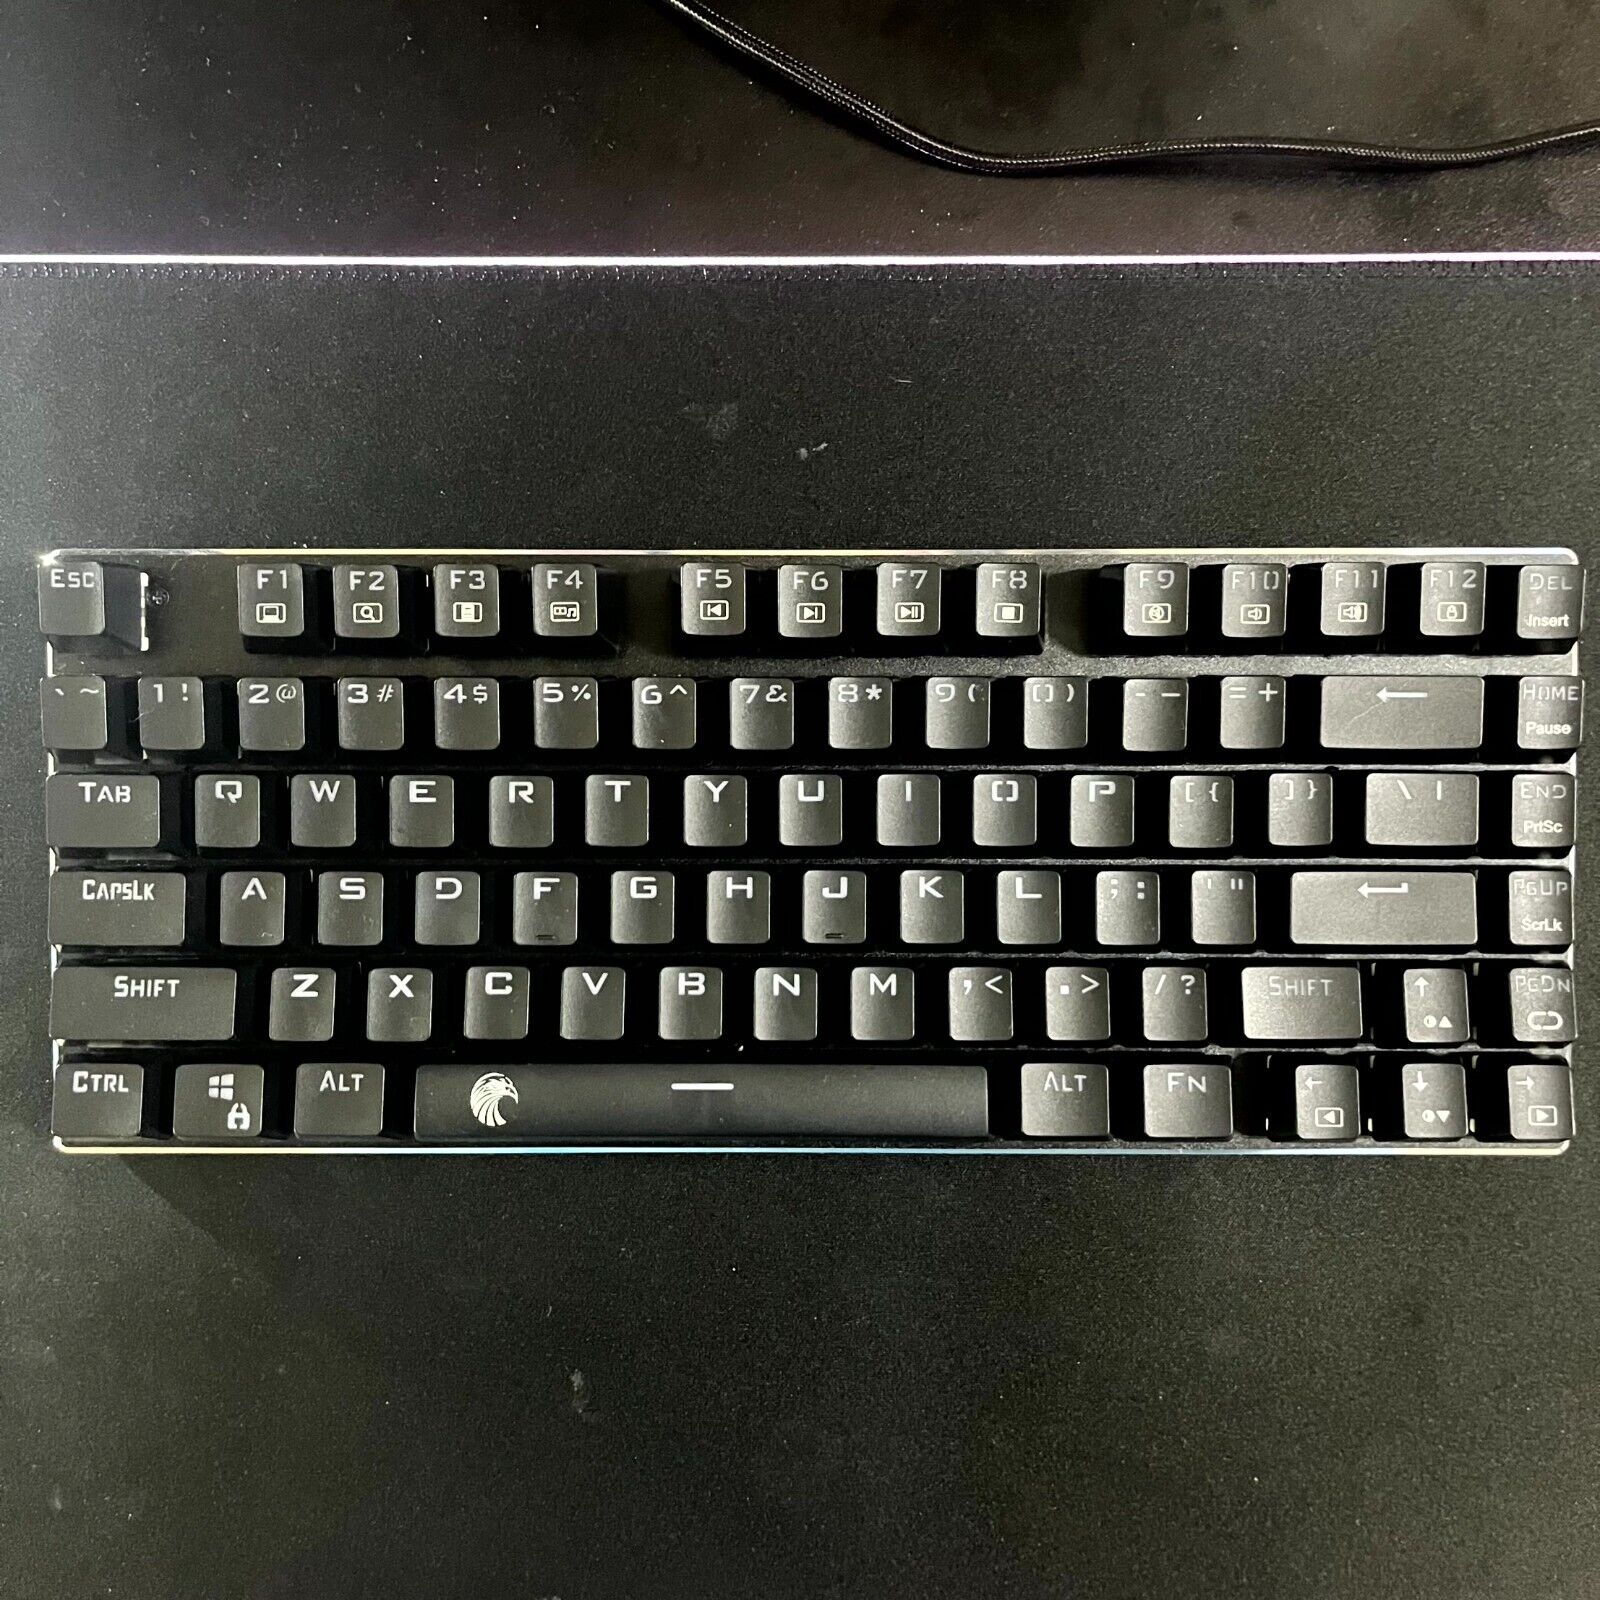 (MODDED) E-Yooso Super Scholar/Z-88 Black 81 Keys RGB Mechanical Gaming Keyboard